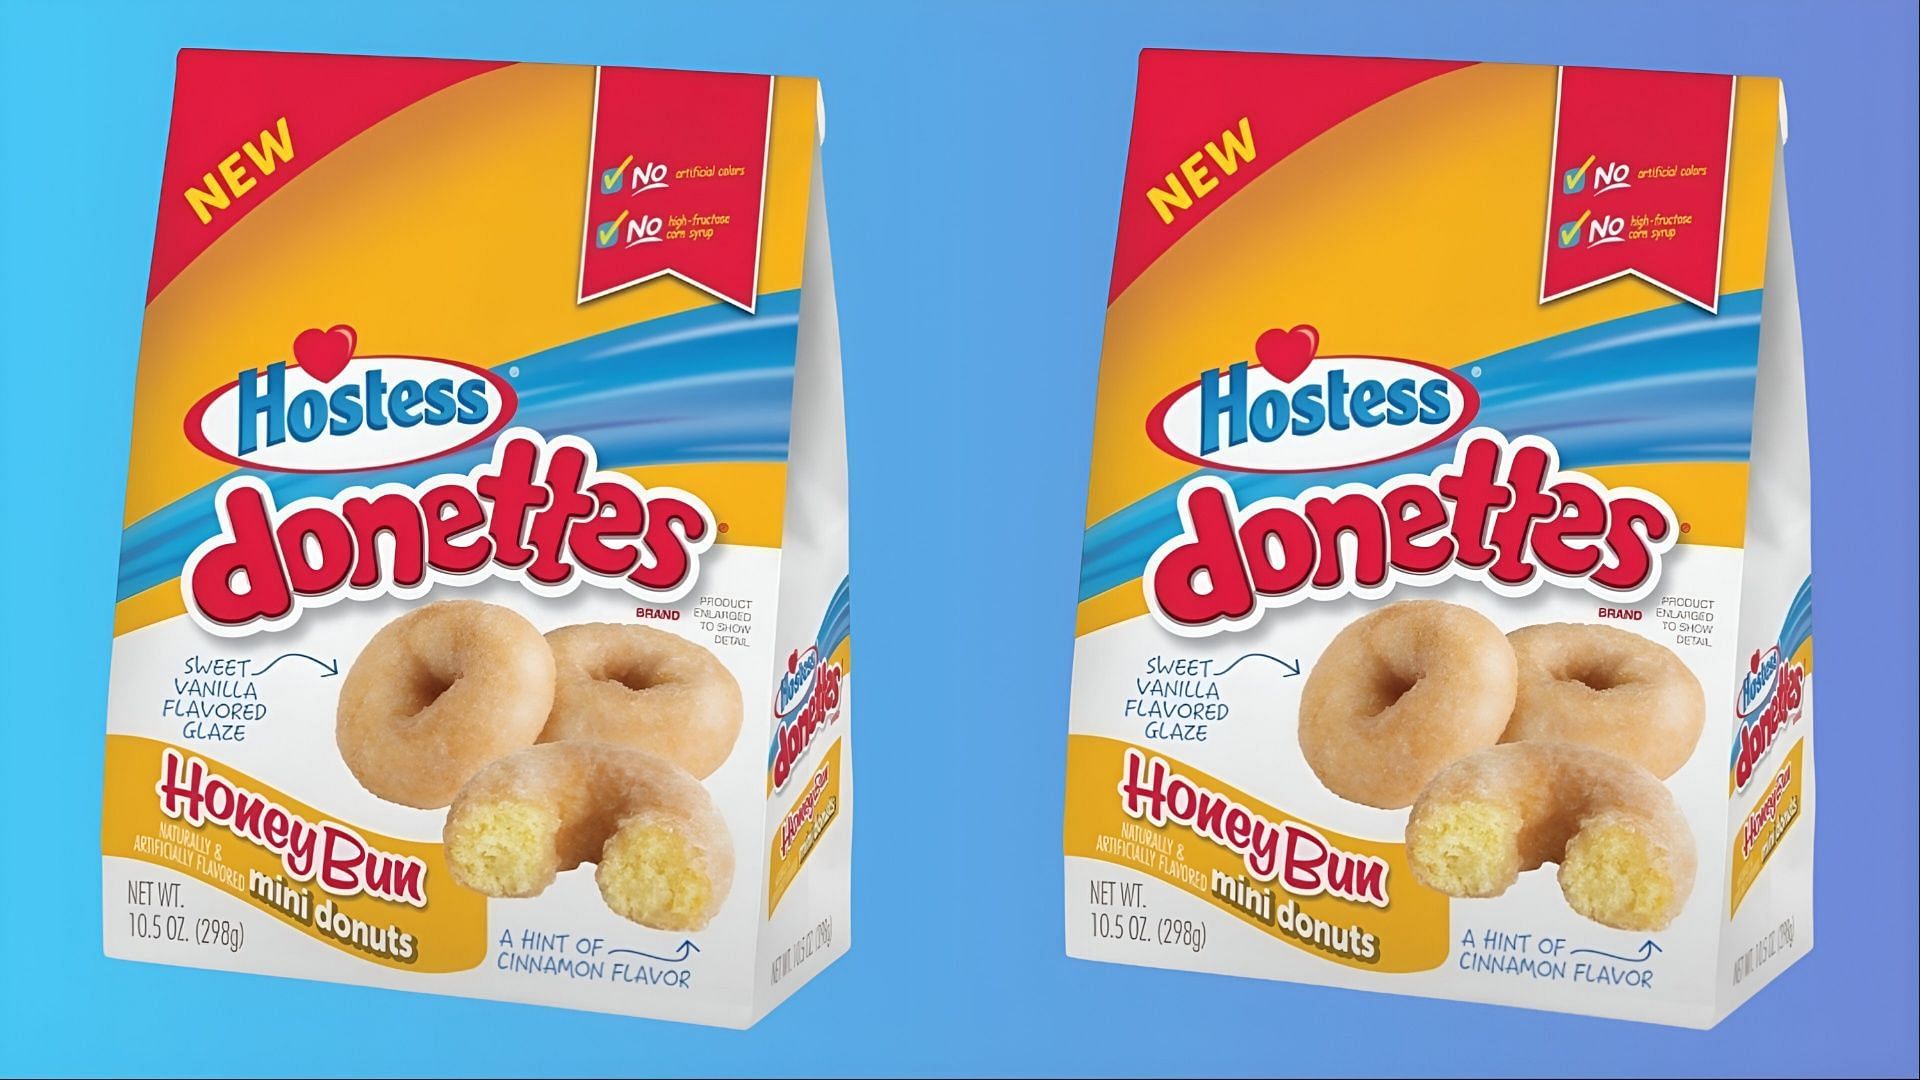 Hostess introduces new HoneyBun Donettes (Image via Hostess / J. M. Smucker Co.)